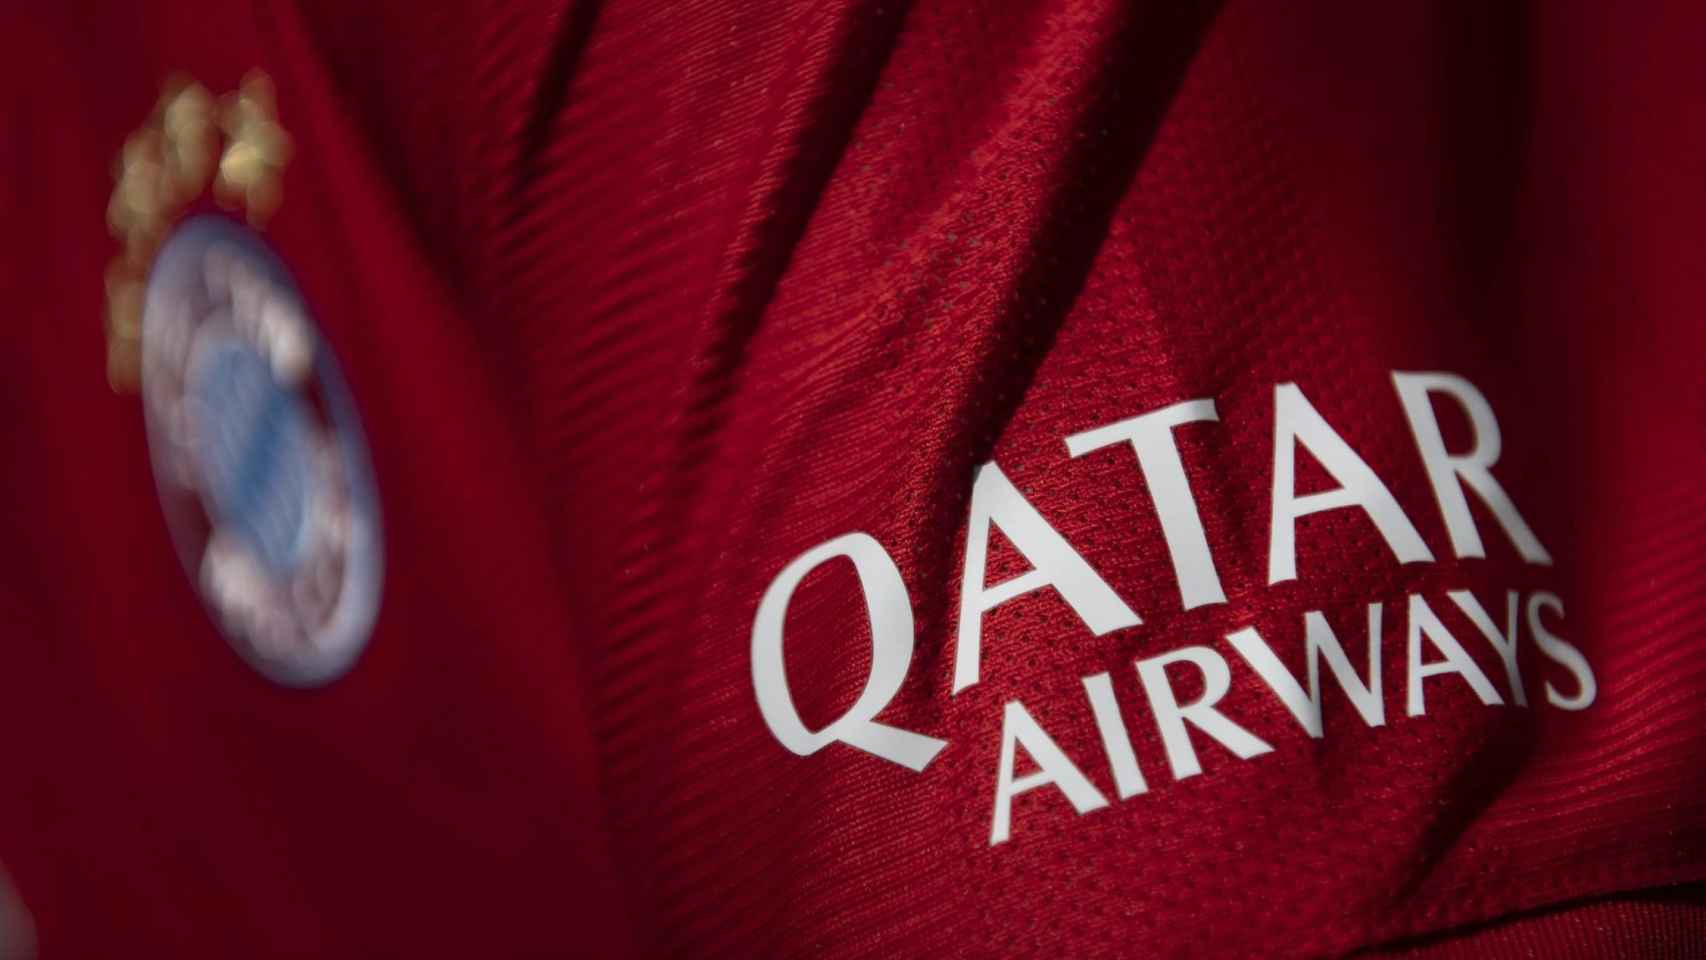 Patrocinio de Qatar Arways con el Bayern Múnich